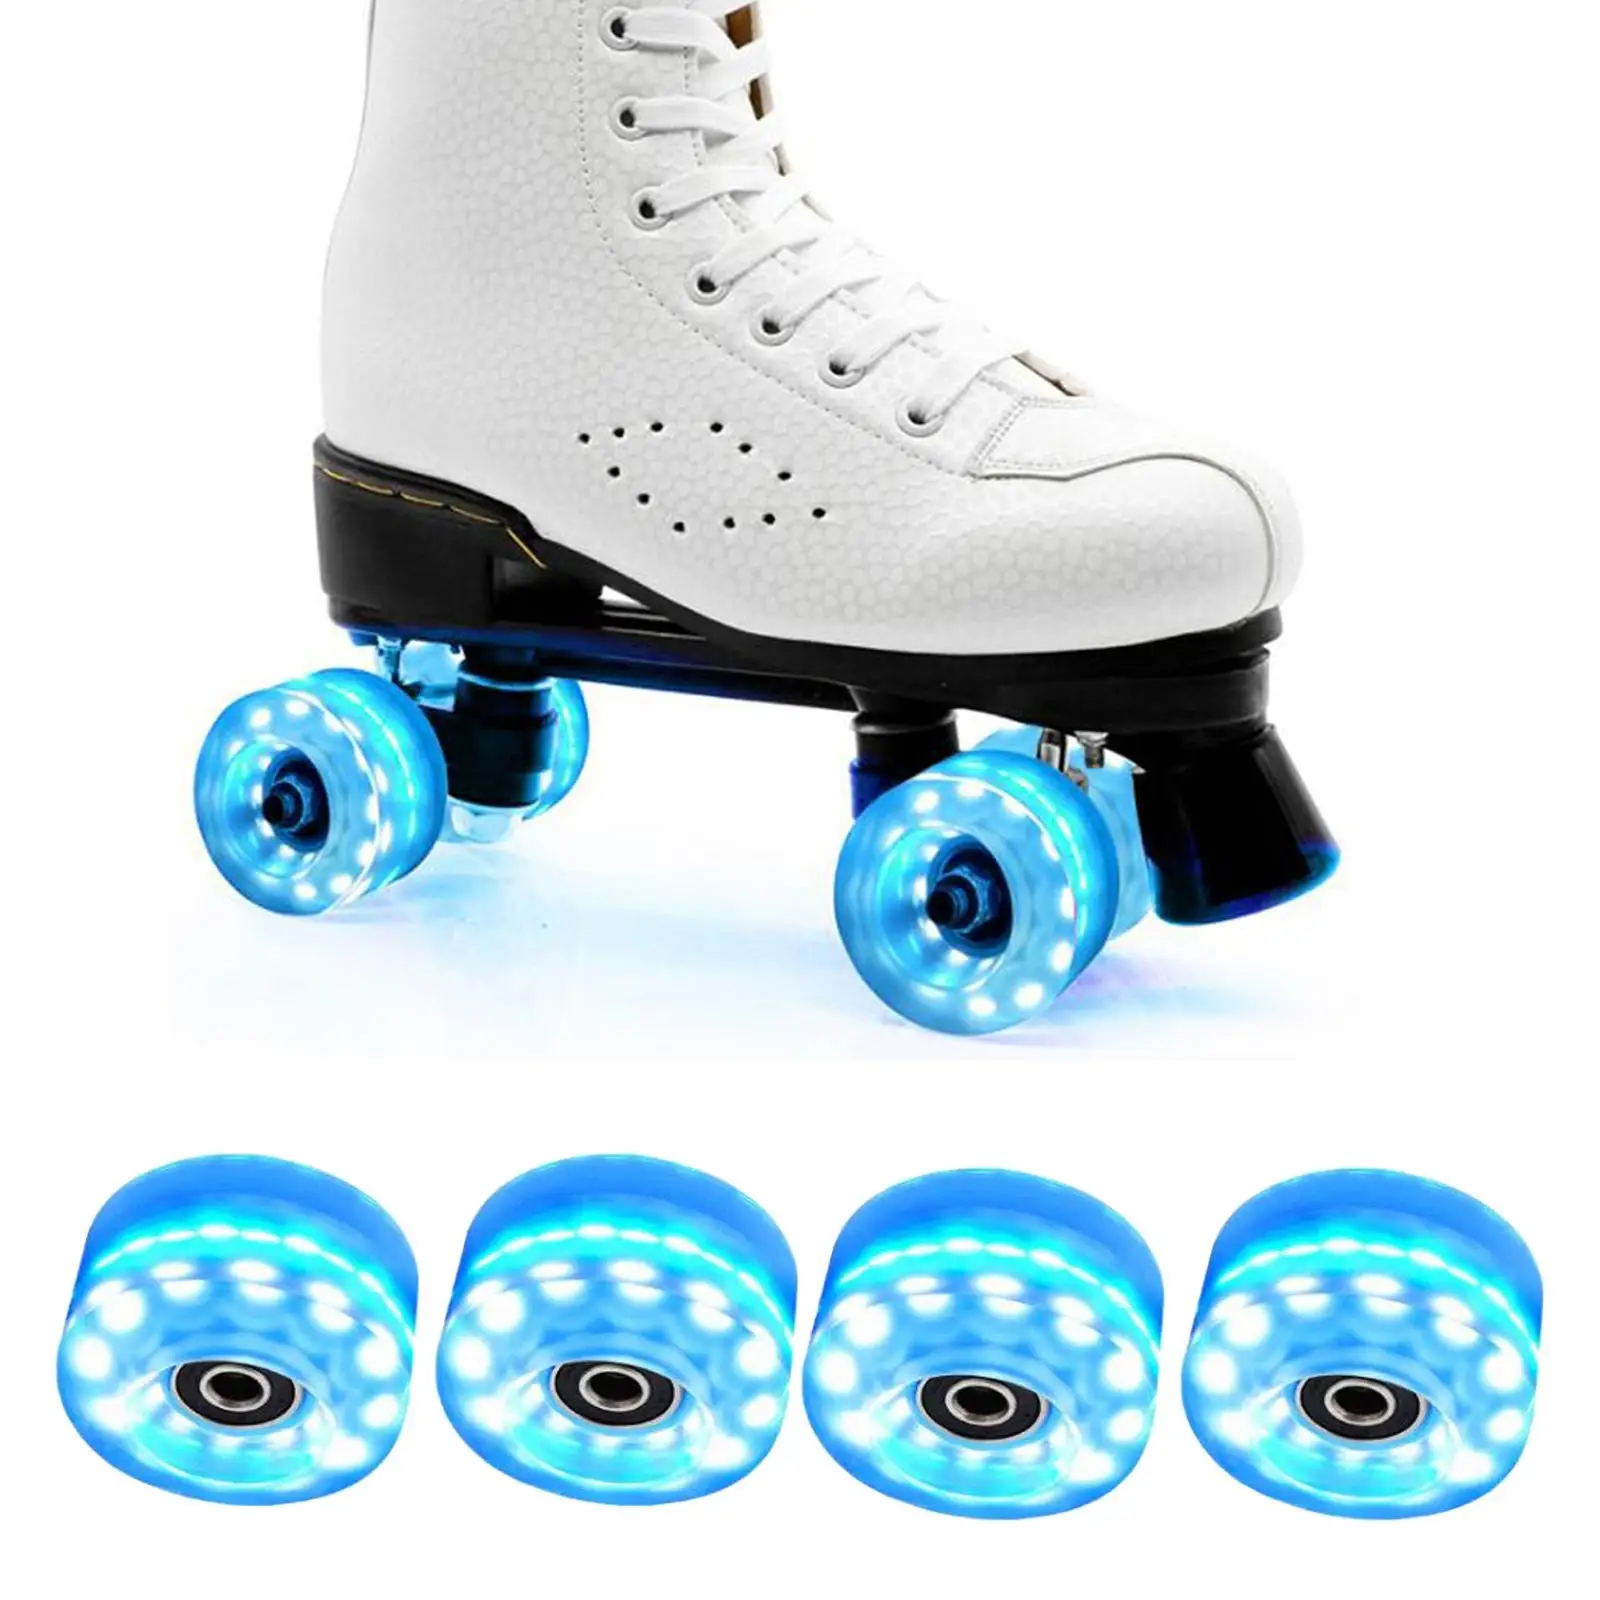 4PCS  Quad Roller Skate Wheels 58mm x 32mm, Luminous  Quad Roller Skateboard Wheels with Bearings Installed